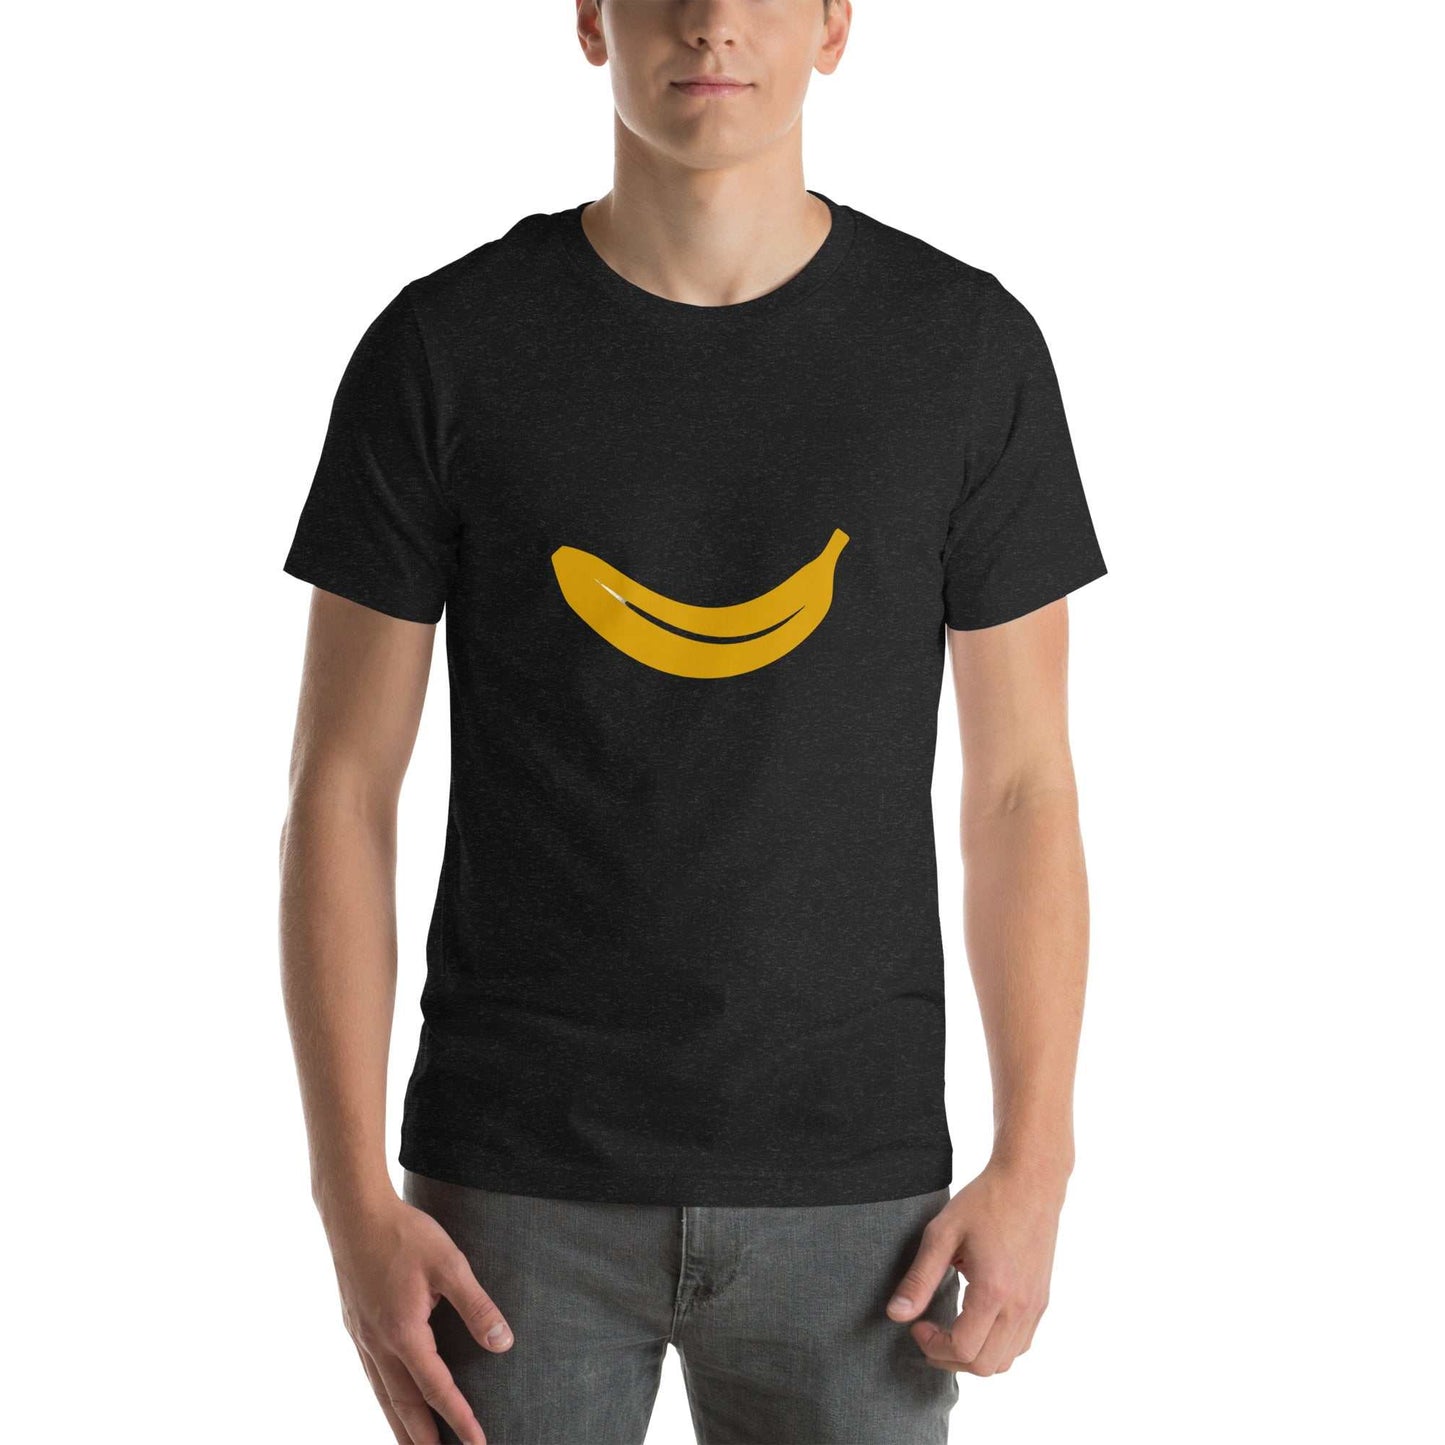 Fruit-Shirt - Banana T-Shirt